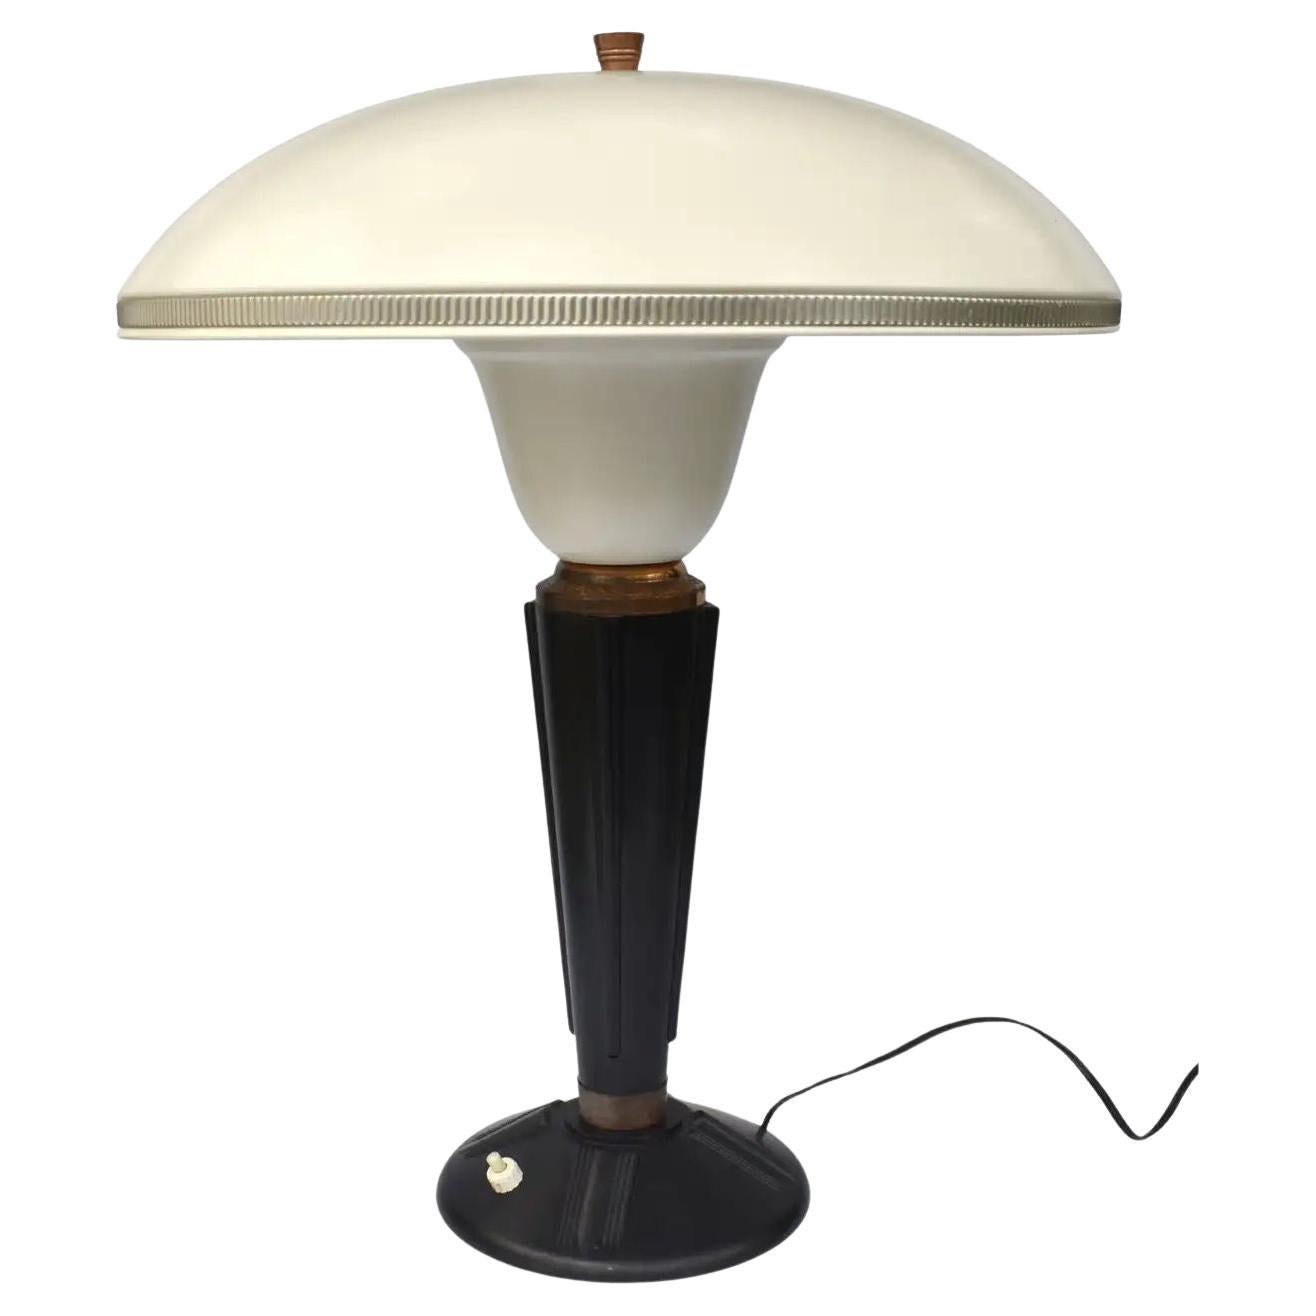 Art Deco Iconic Large Bakelite Desk Table Lamp by Eileen Gray, France, C1930